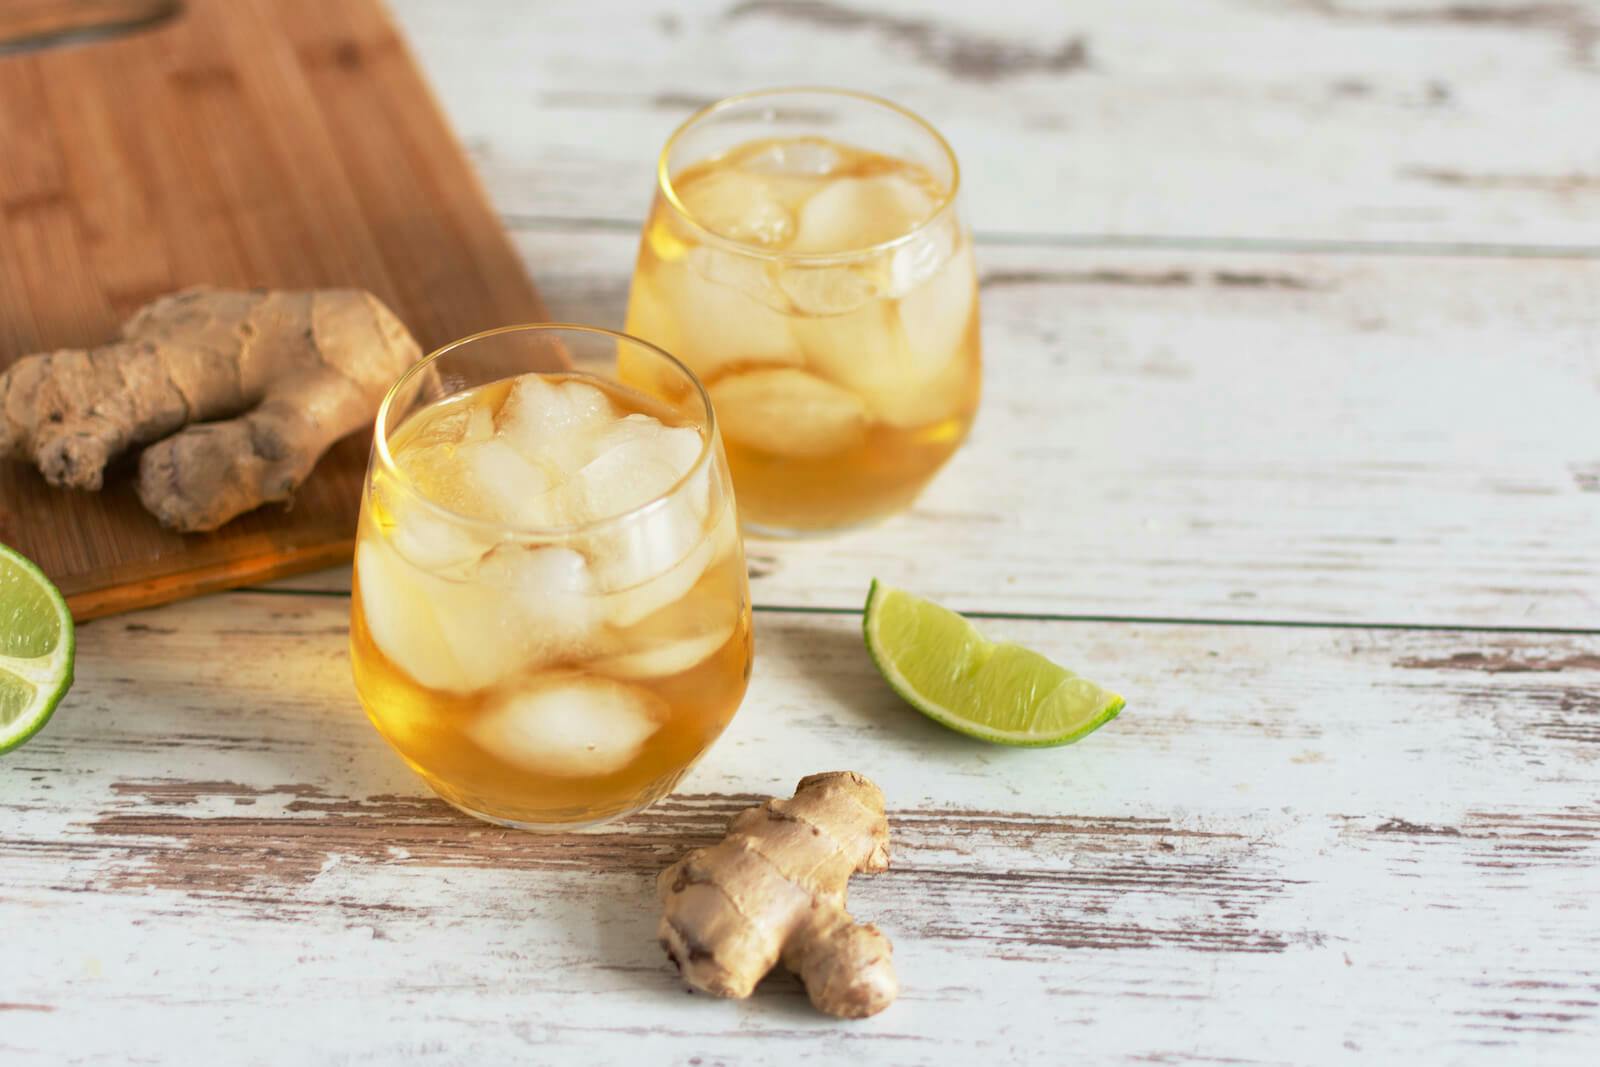 Ginger ale benefits: 2 glasses of iced ginger ale